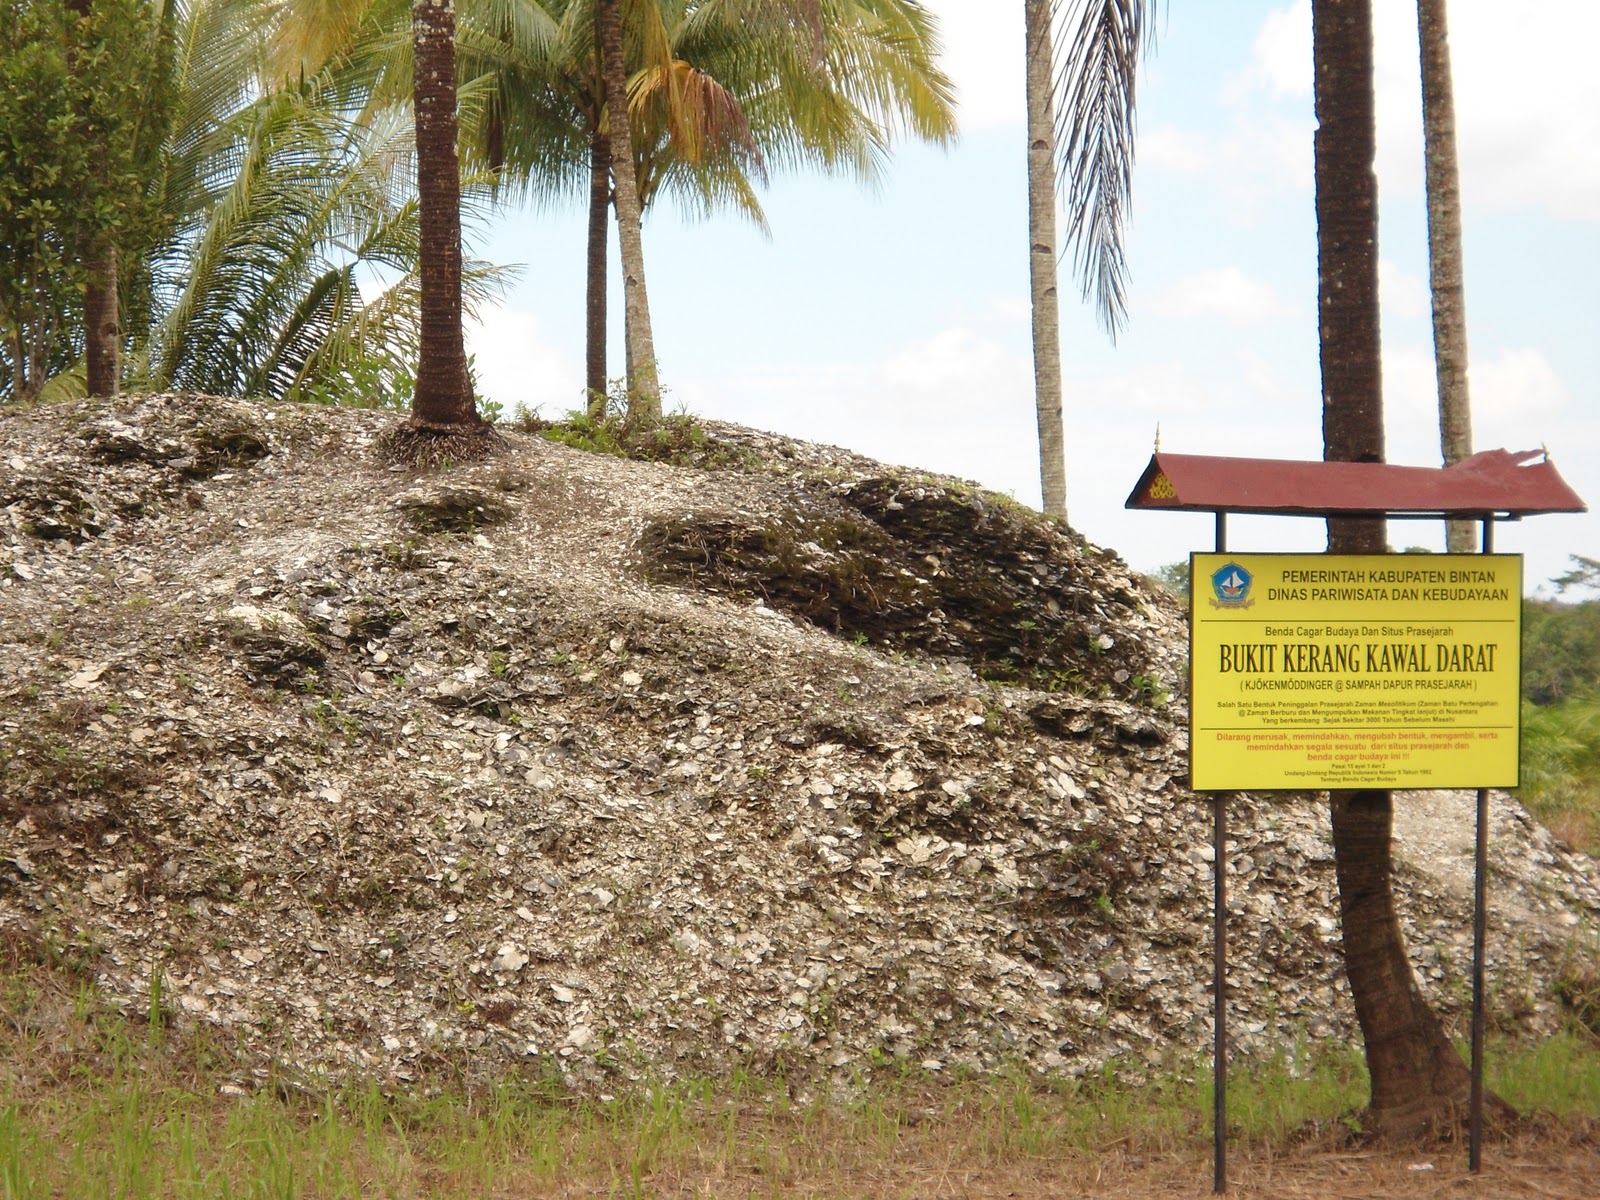 Bukit fosil yang terdiri kerang kulit-kulit kecil disebut dari tumpukan berupa PENDUDUK INDONESIA